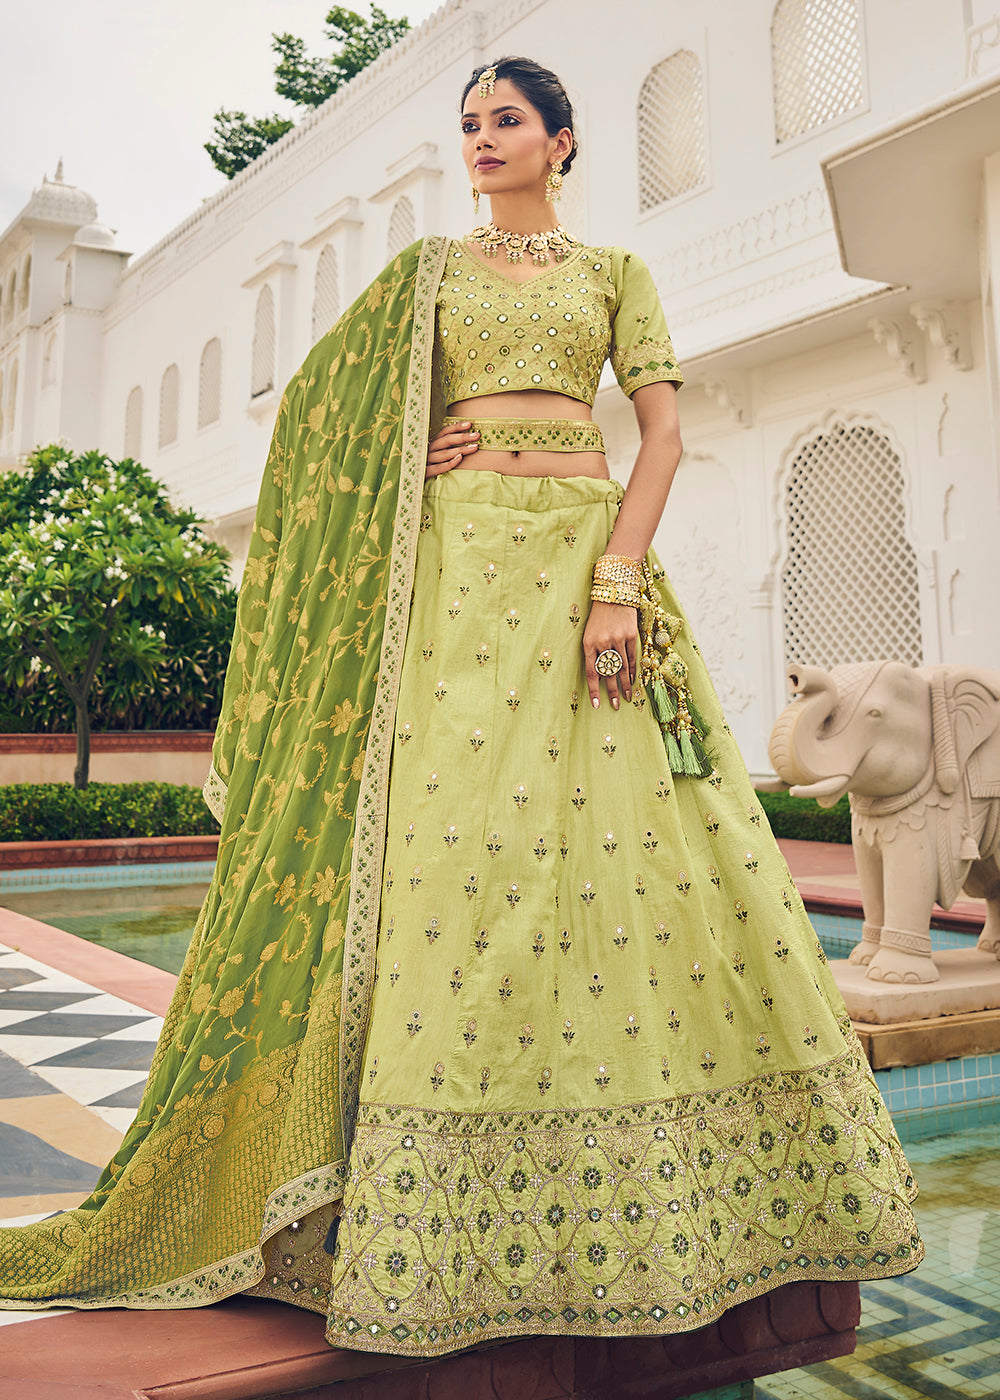 Buy Now Ravishing Green Viscose Silk Traditional Bridal Lehenga Choli Online in USA, UK, Canada & Worldwide at Empress Clothing.